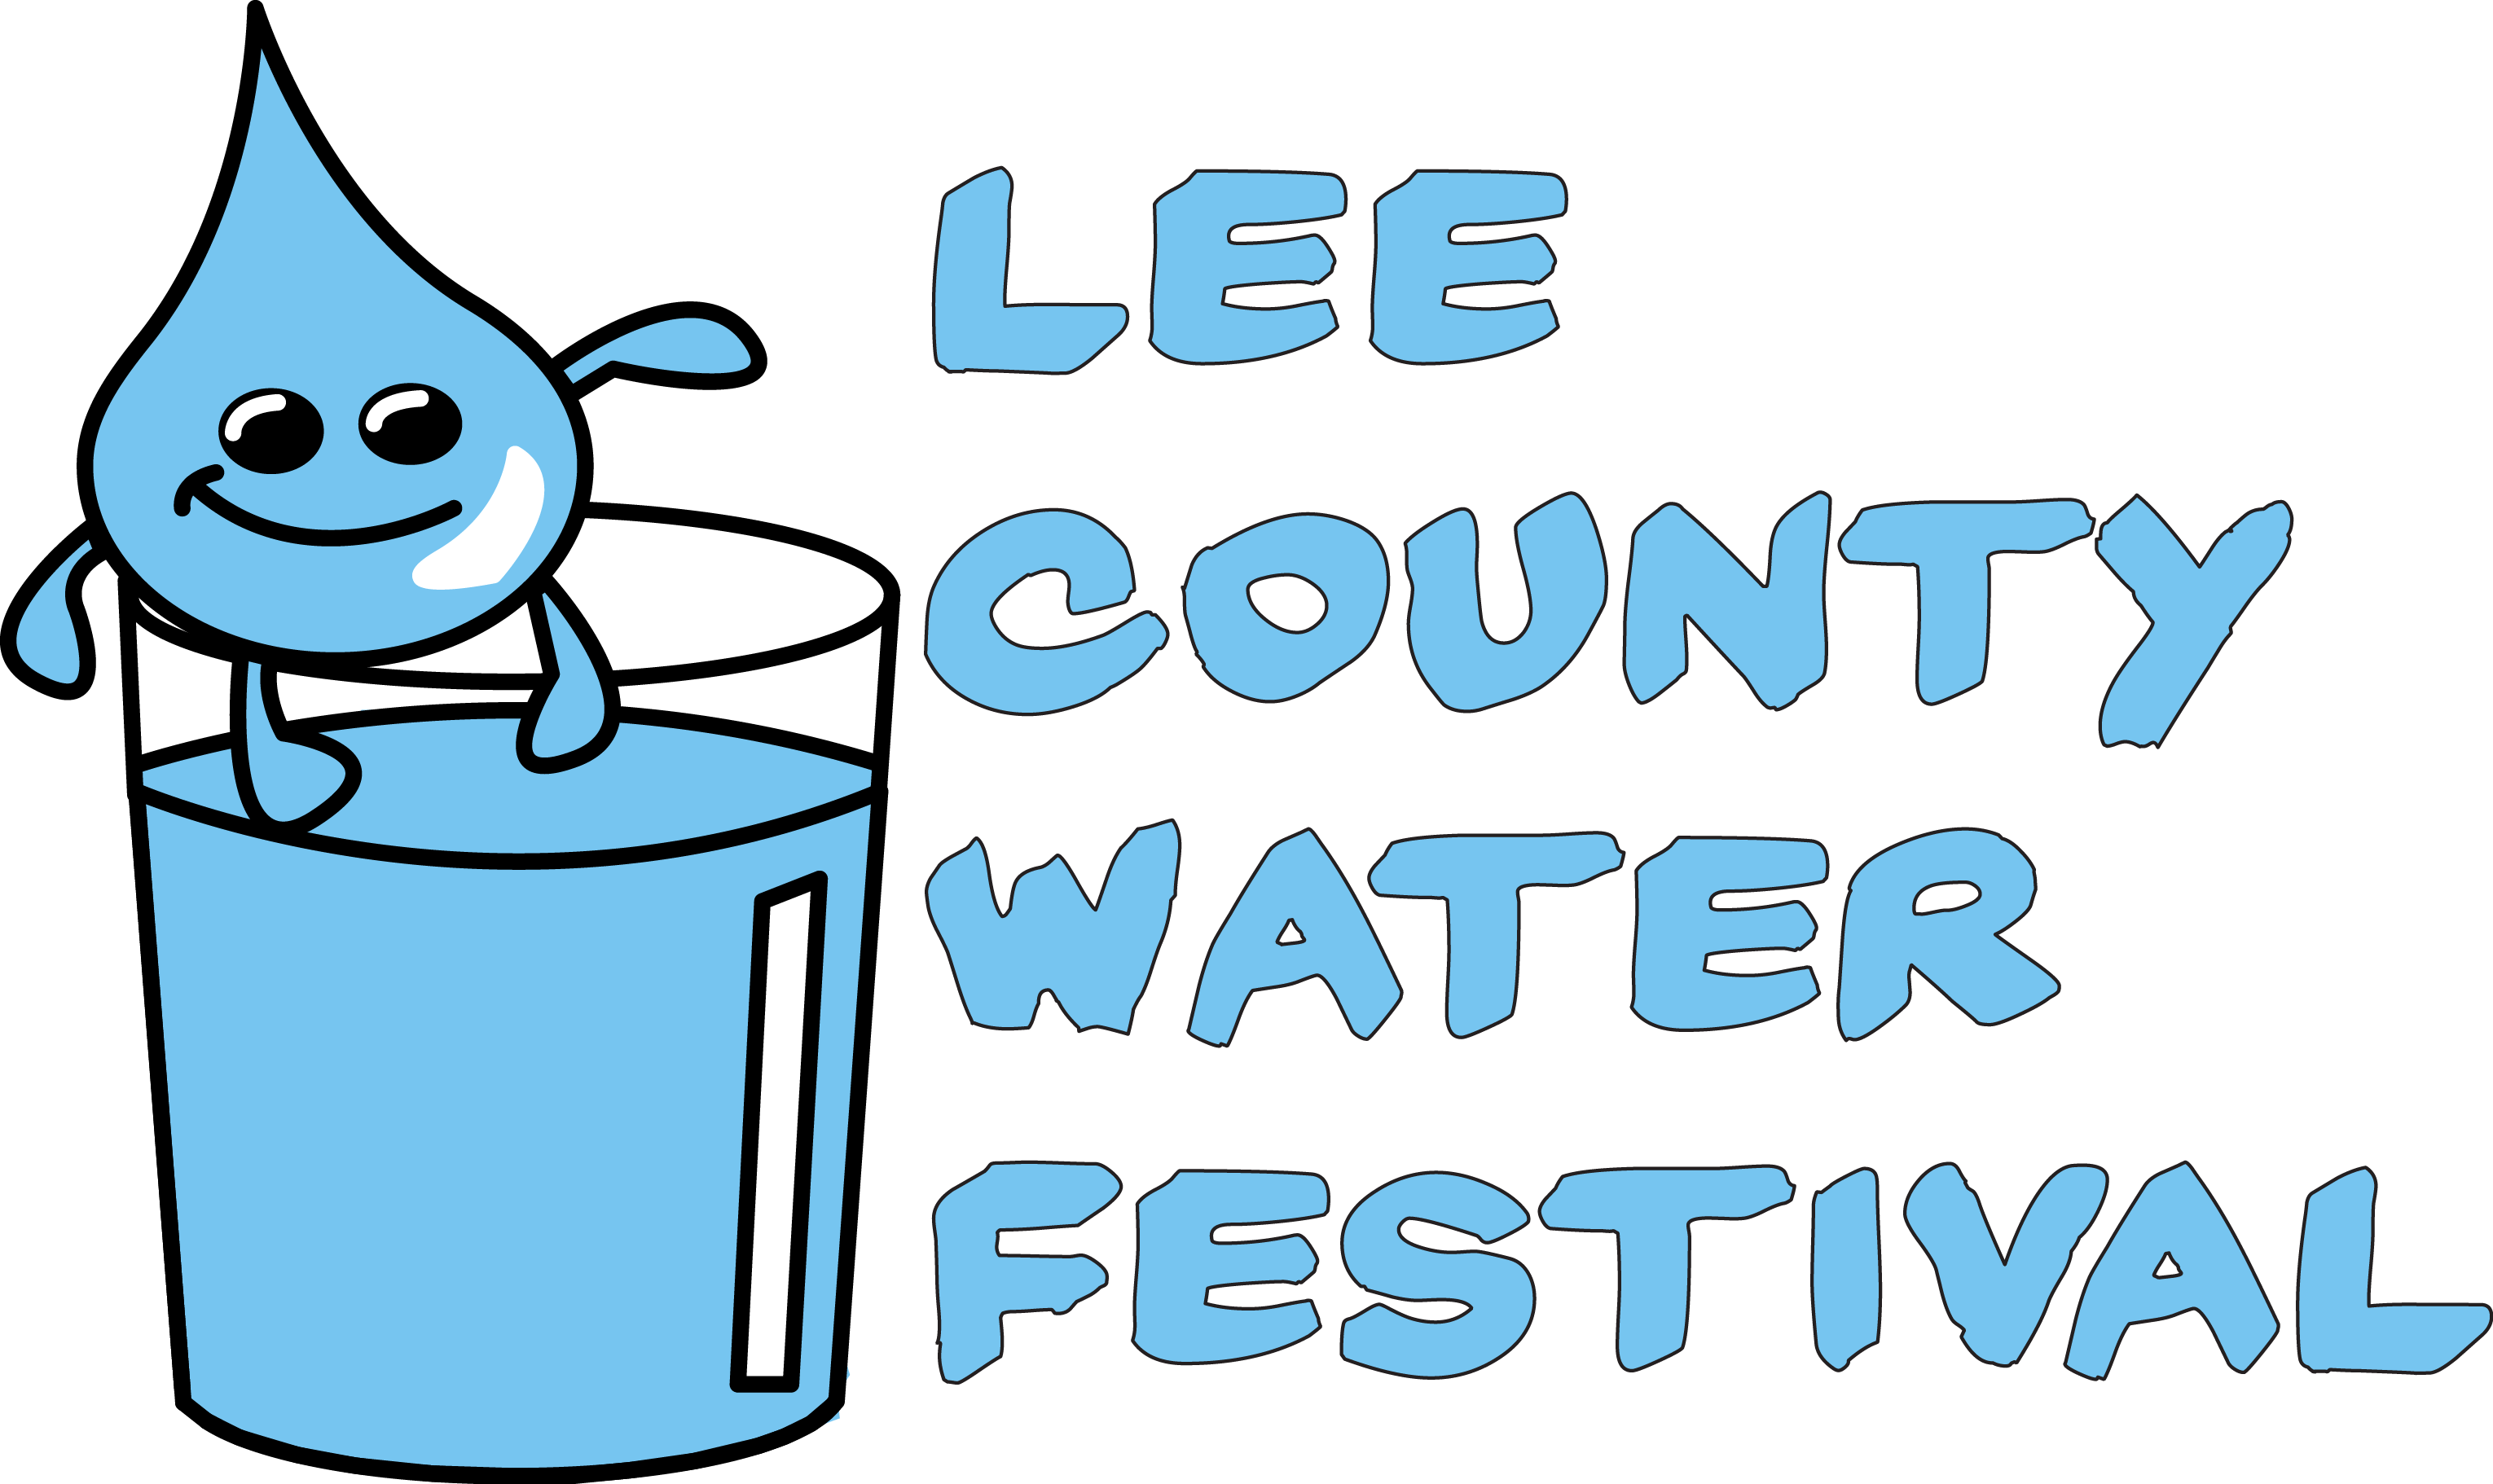 Lee County Water Festival - City of Auburn